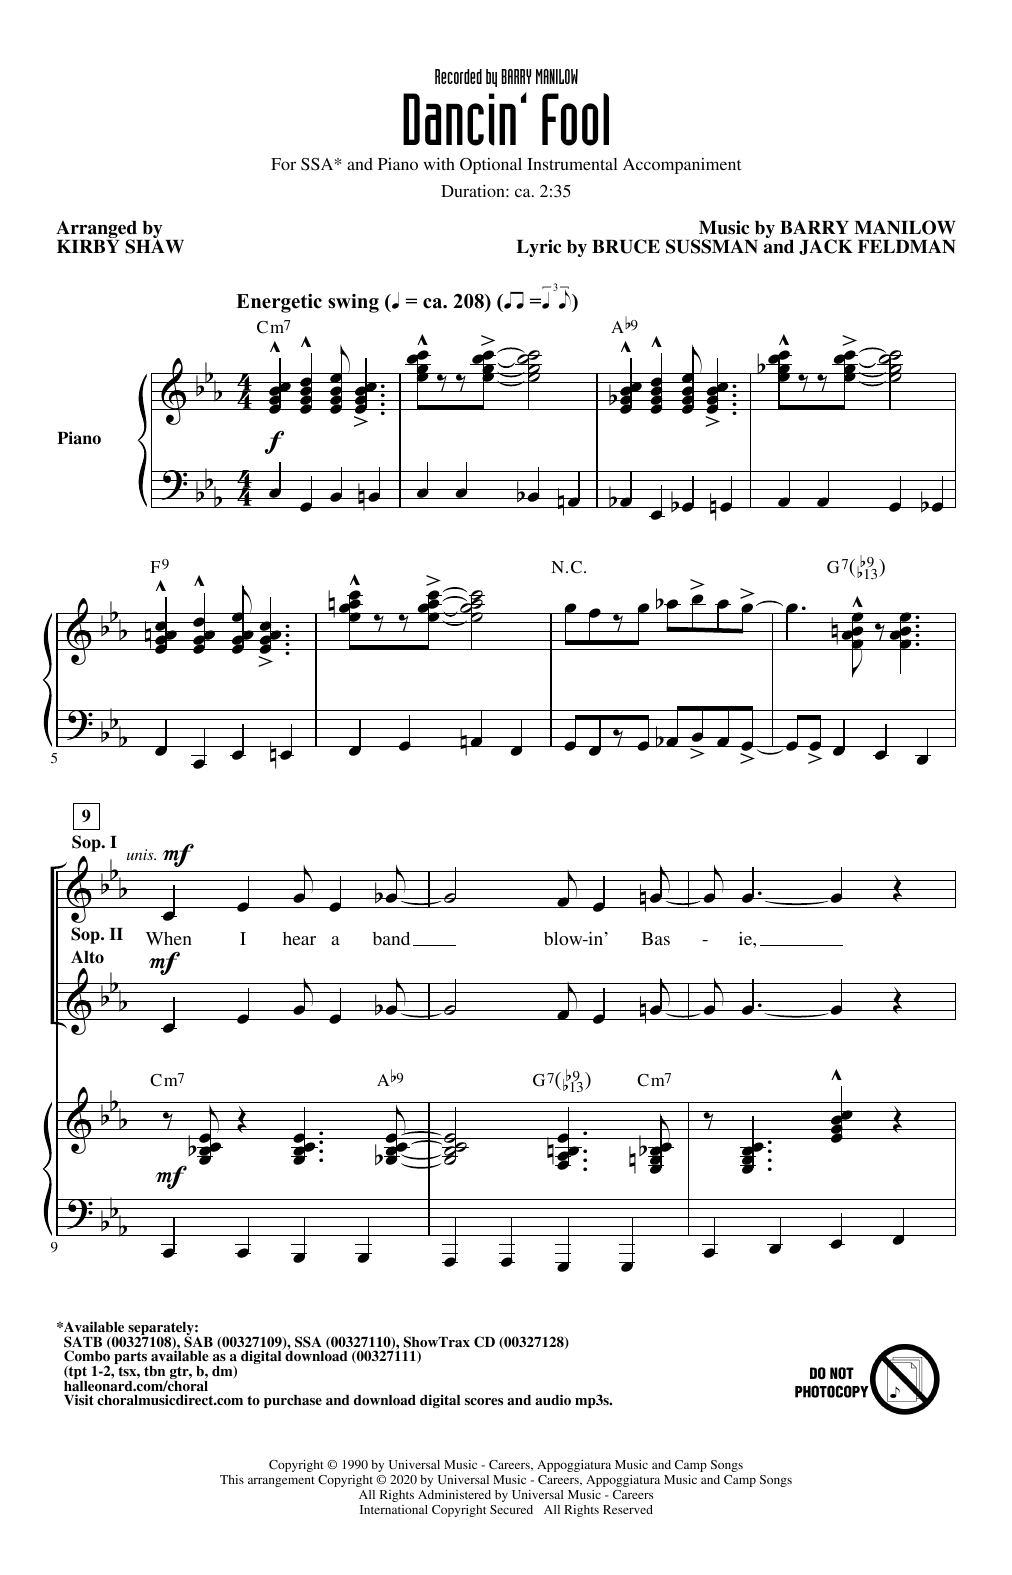 Barry Manilow Dancin' Fool (arr. Kirby Shaw) Sheet Music Notes & Chords for SAB Choir - Download or Print PDF